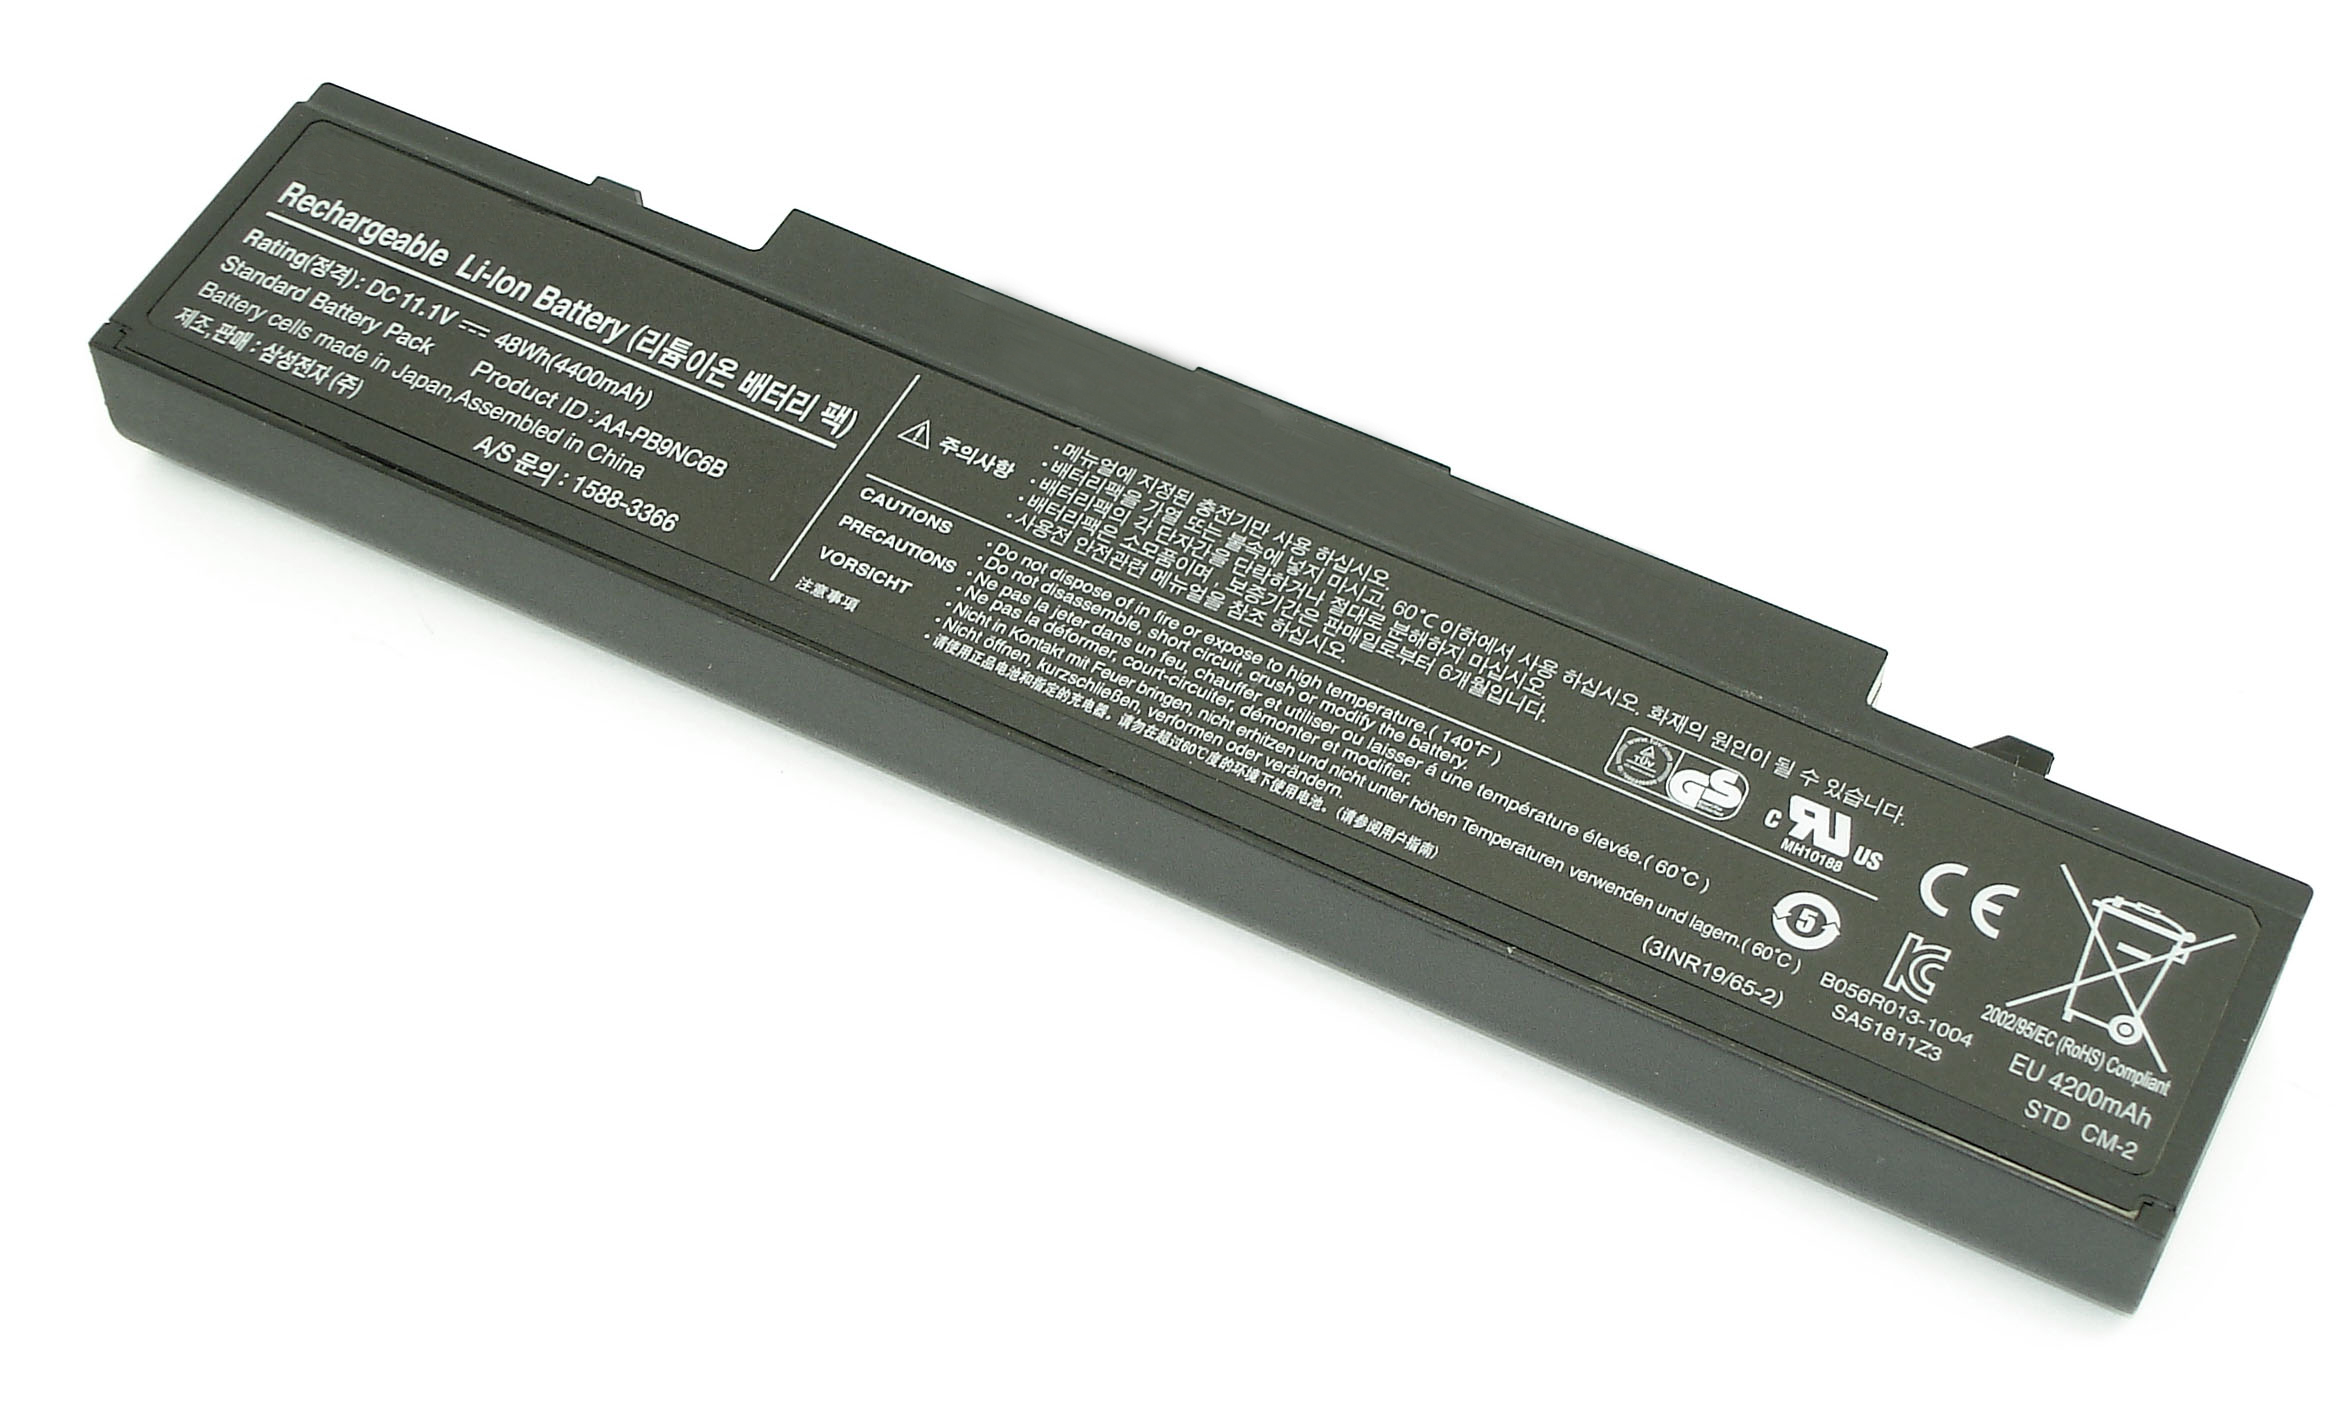 Купить аккумулятор для ноутбука SAMSUNG AA-PB9NC6B 48 Wh 11.1V